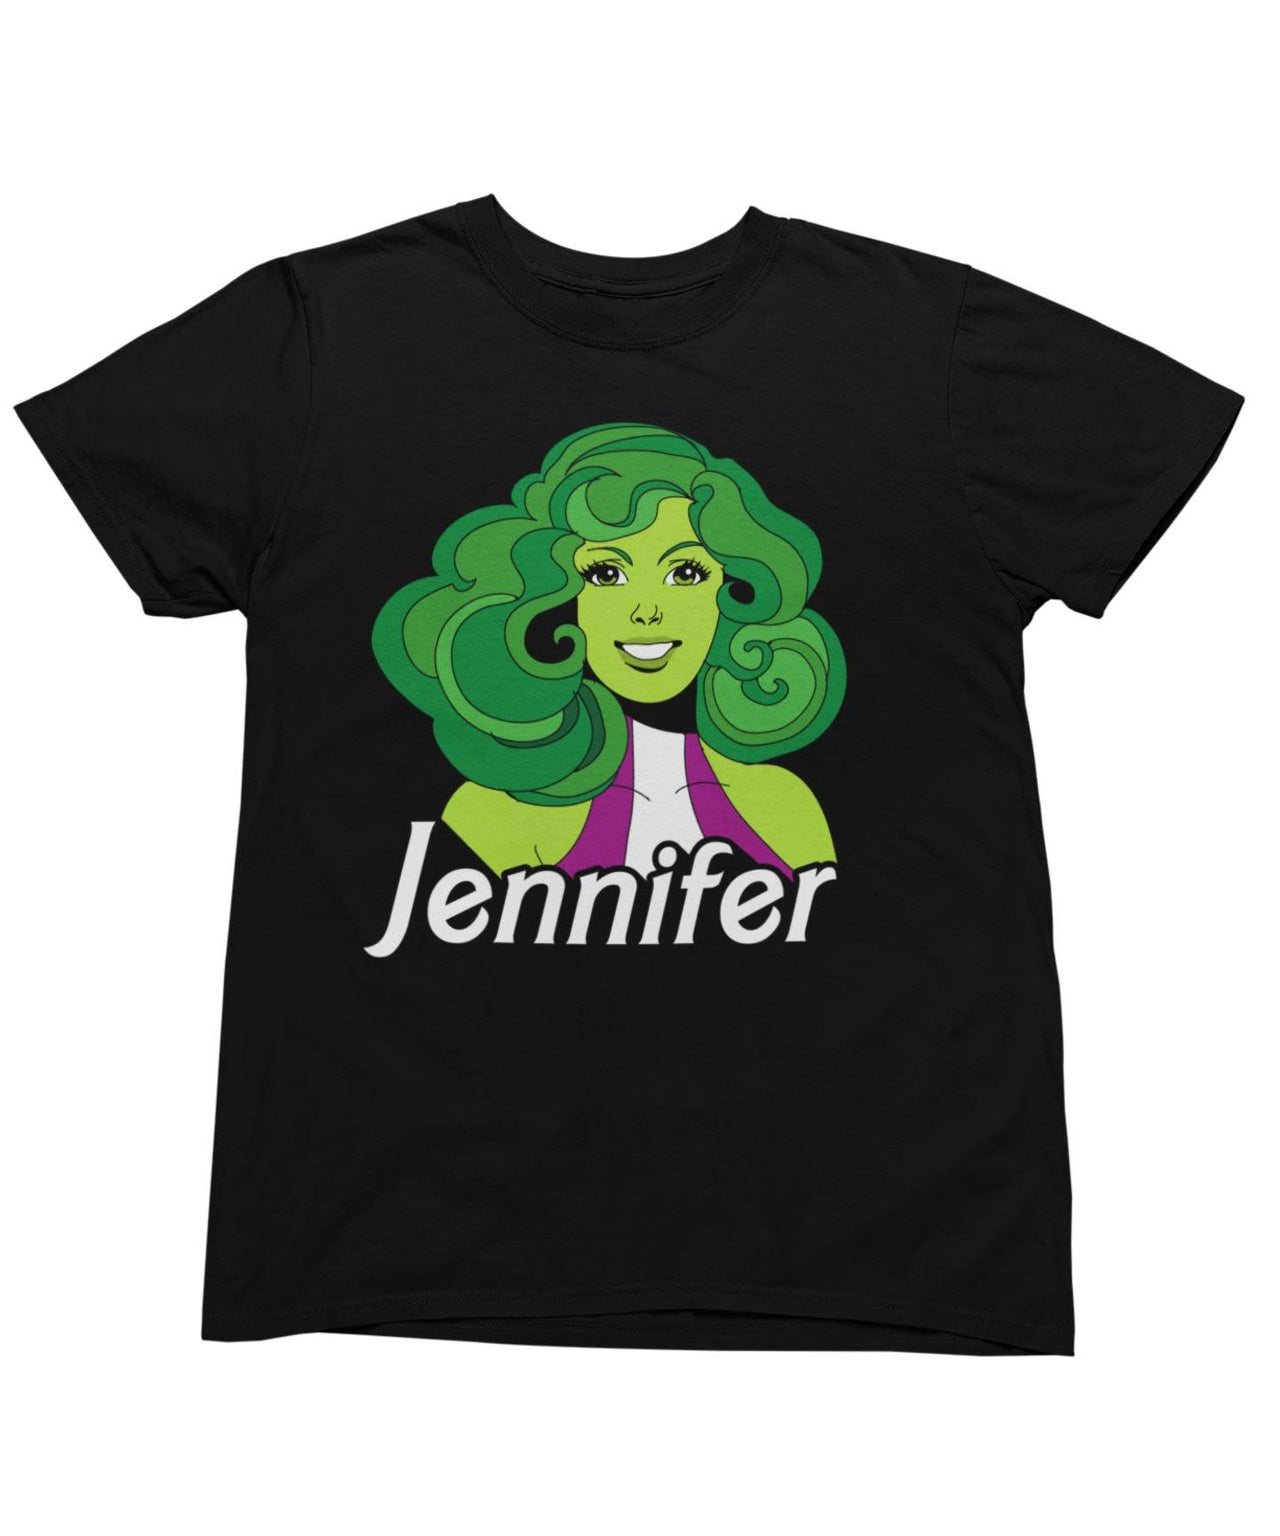 Top Notchy Jennifer Barbie She-Hulk Men's/Unisex Unisex T-Shirt 8Ball